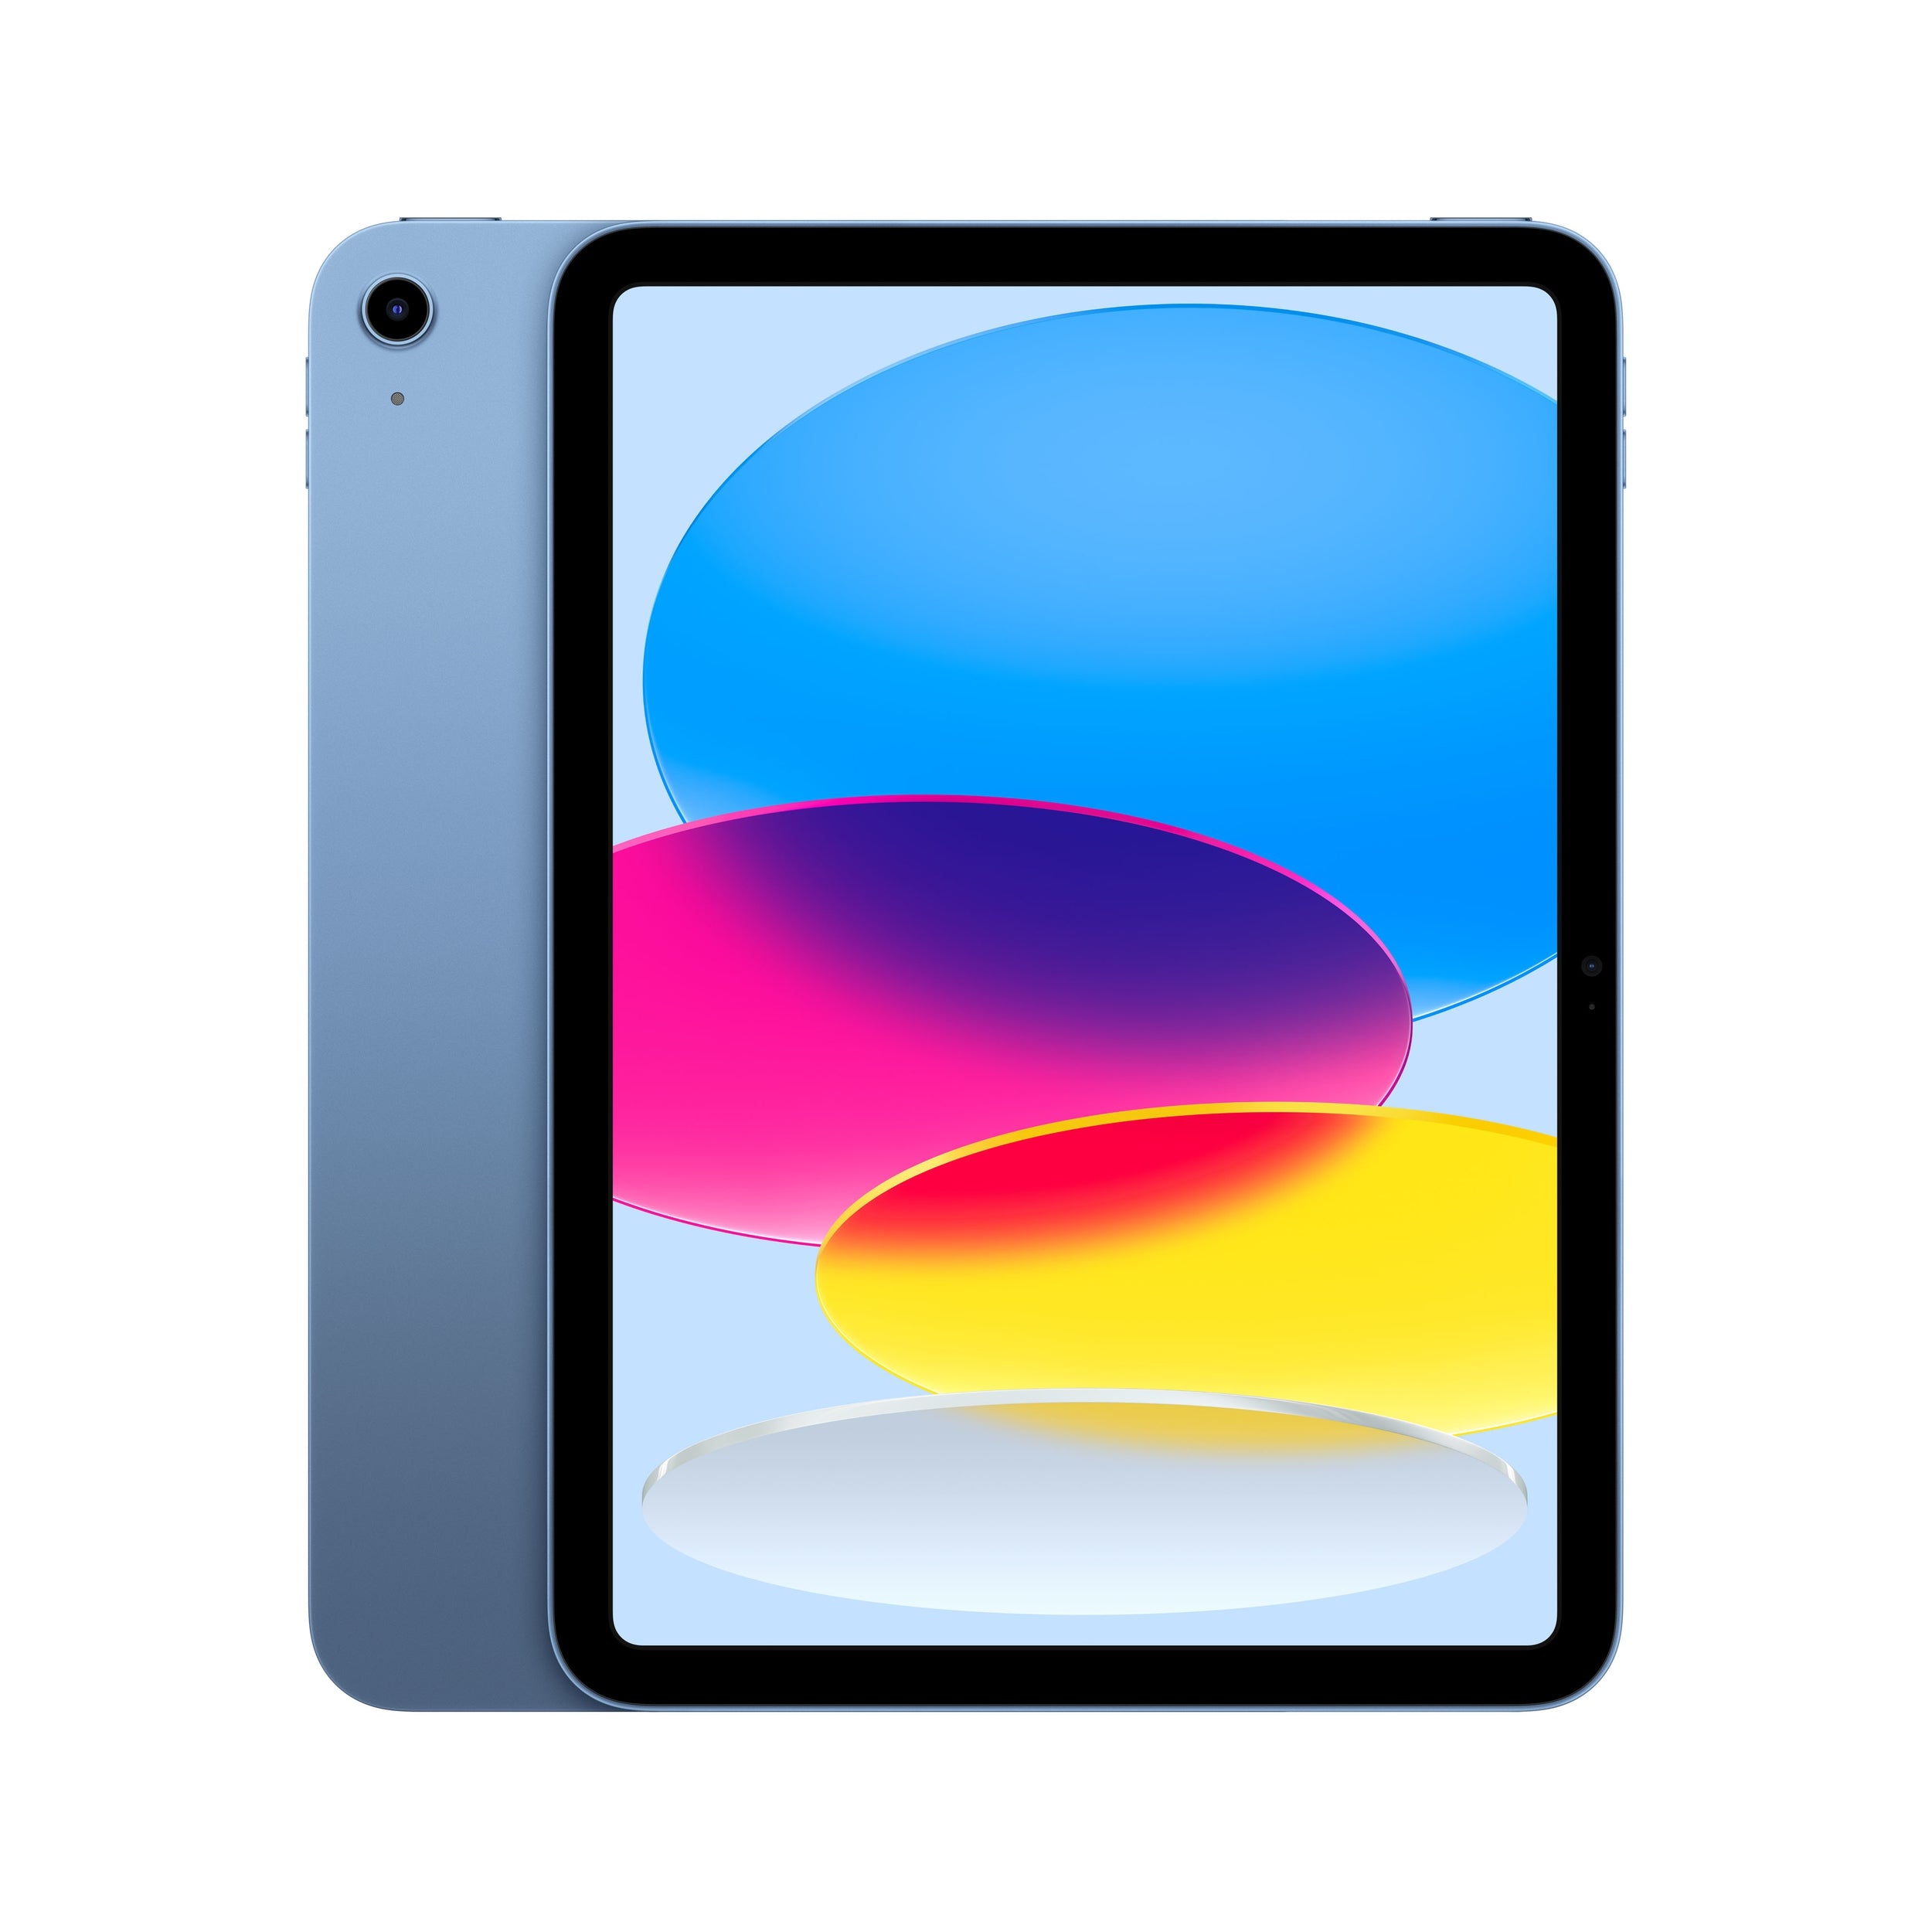 Ipad Apple Mpq13Lz/A Decima Generación A14 64 Gb 10.9 Pulgadas 2360 X 1640 Pixeles Ipados Wifi Color Blue